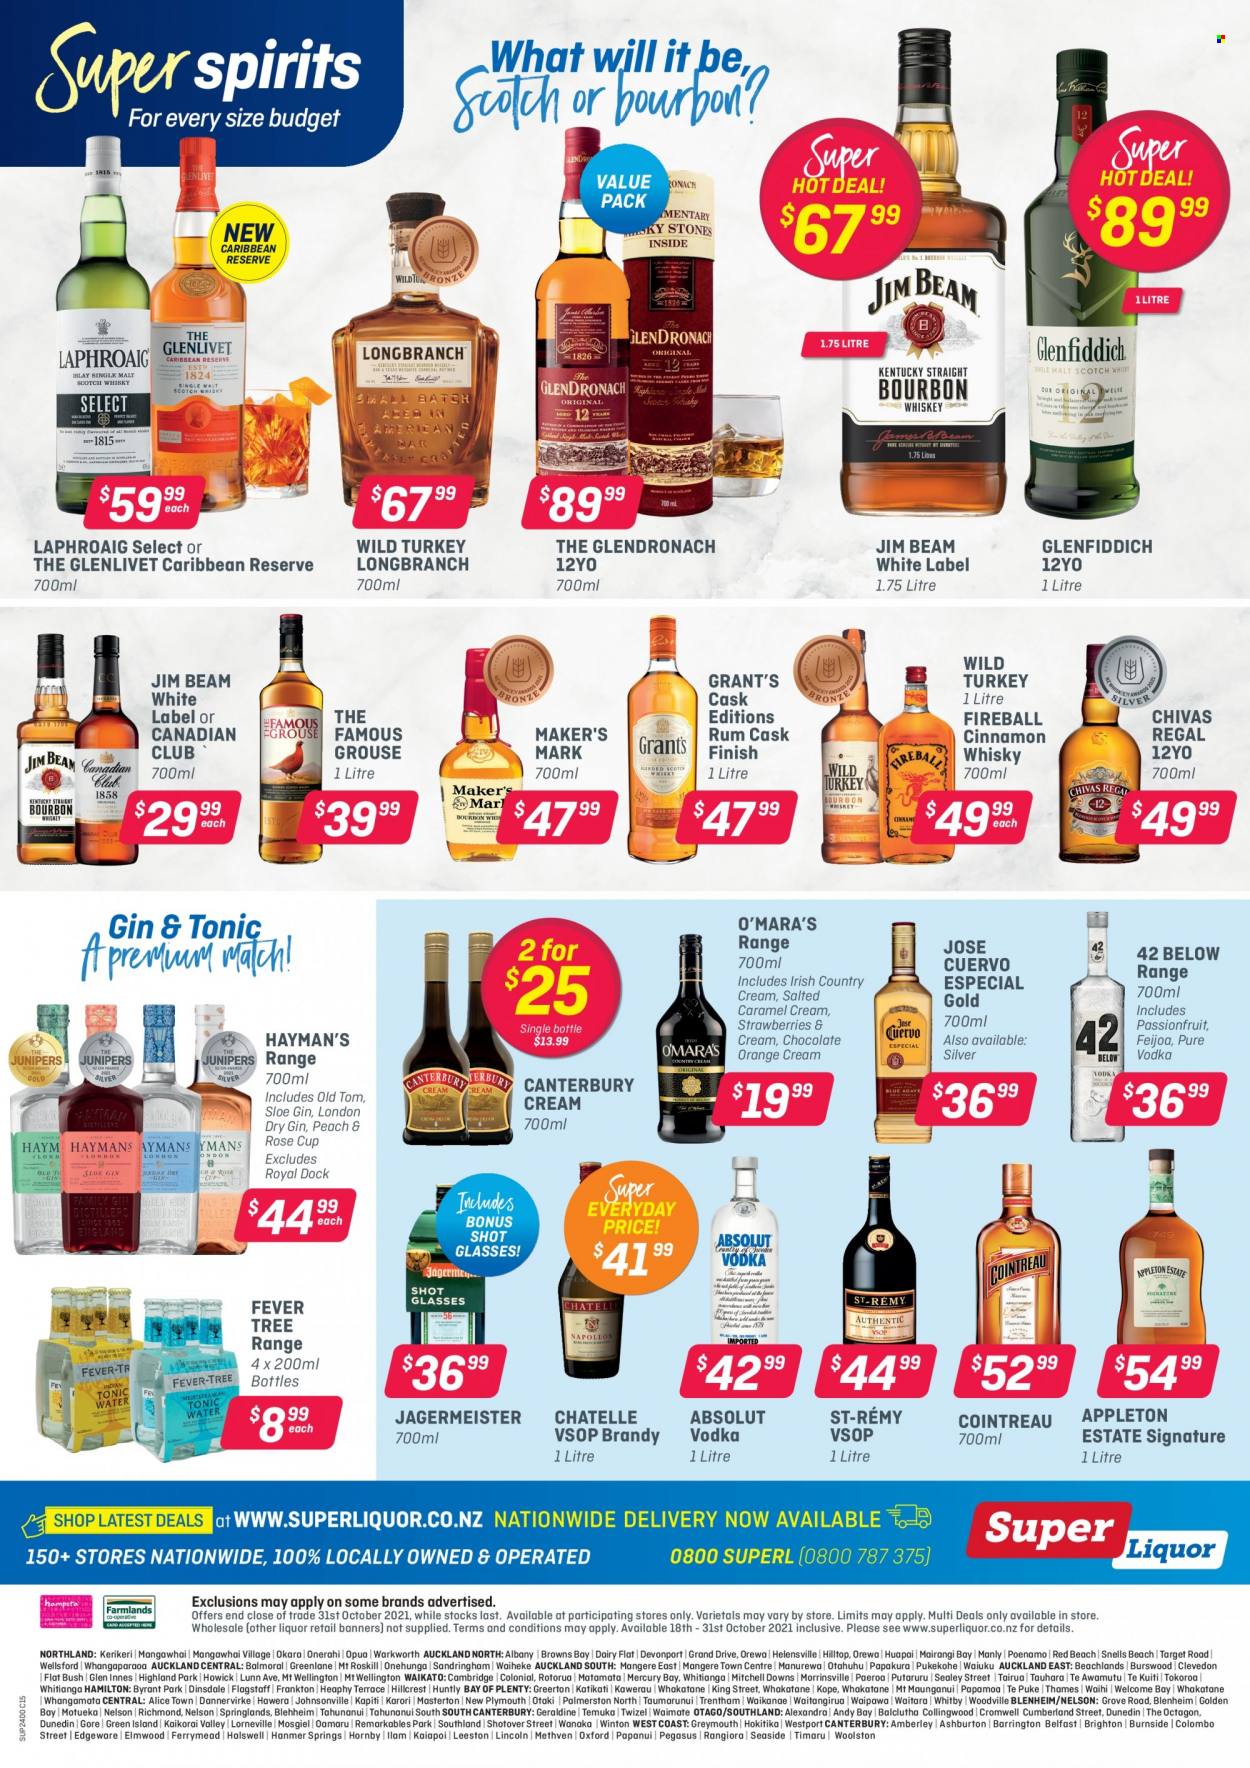 thumbnail - Super Liquor mailer - 18.10.2021 - 31.10.2021 - Sales products - wine, rosé wine, bourbon, brandy, rum, vodka, liquor, Grant's, Absolut, Jägermeister, Chivas Regal, Cointreau, Glenfiddich, The Famous Grouse, gin & tonic, Jim Beam, cinnamon whisky, whisky. Page 12.